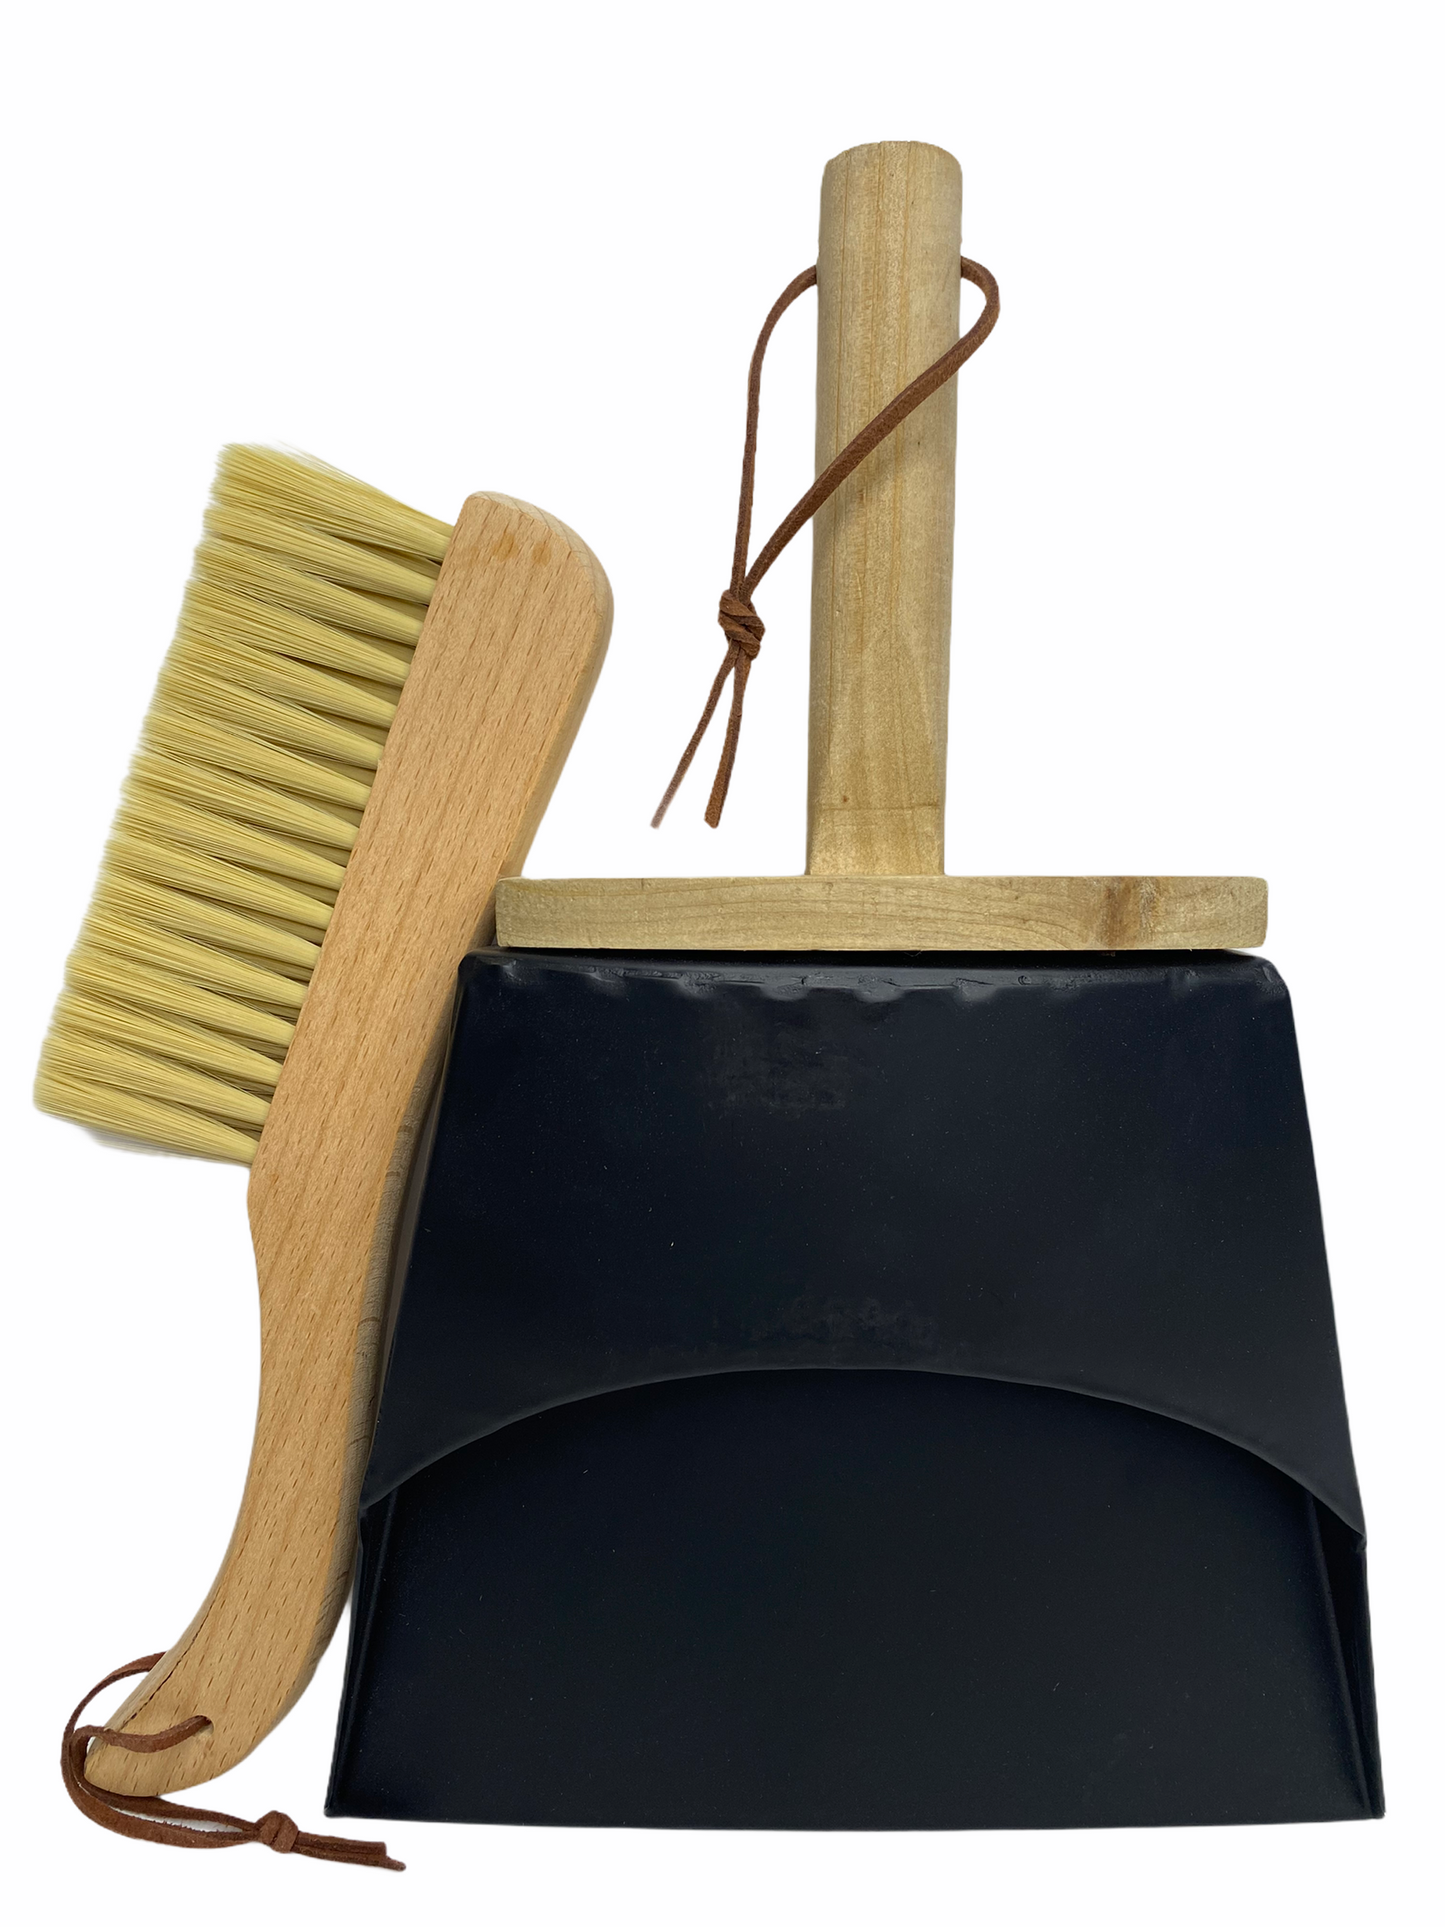 Beech Wood Brush & Metal Dust Pan w/ Leather Straps, Natural & Black, Set of 2